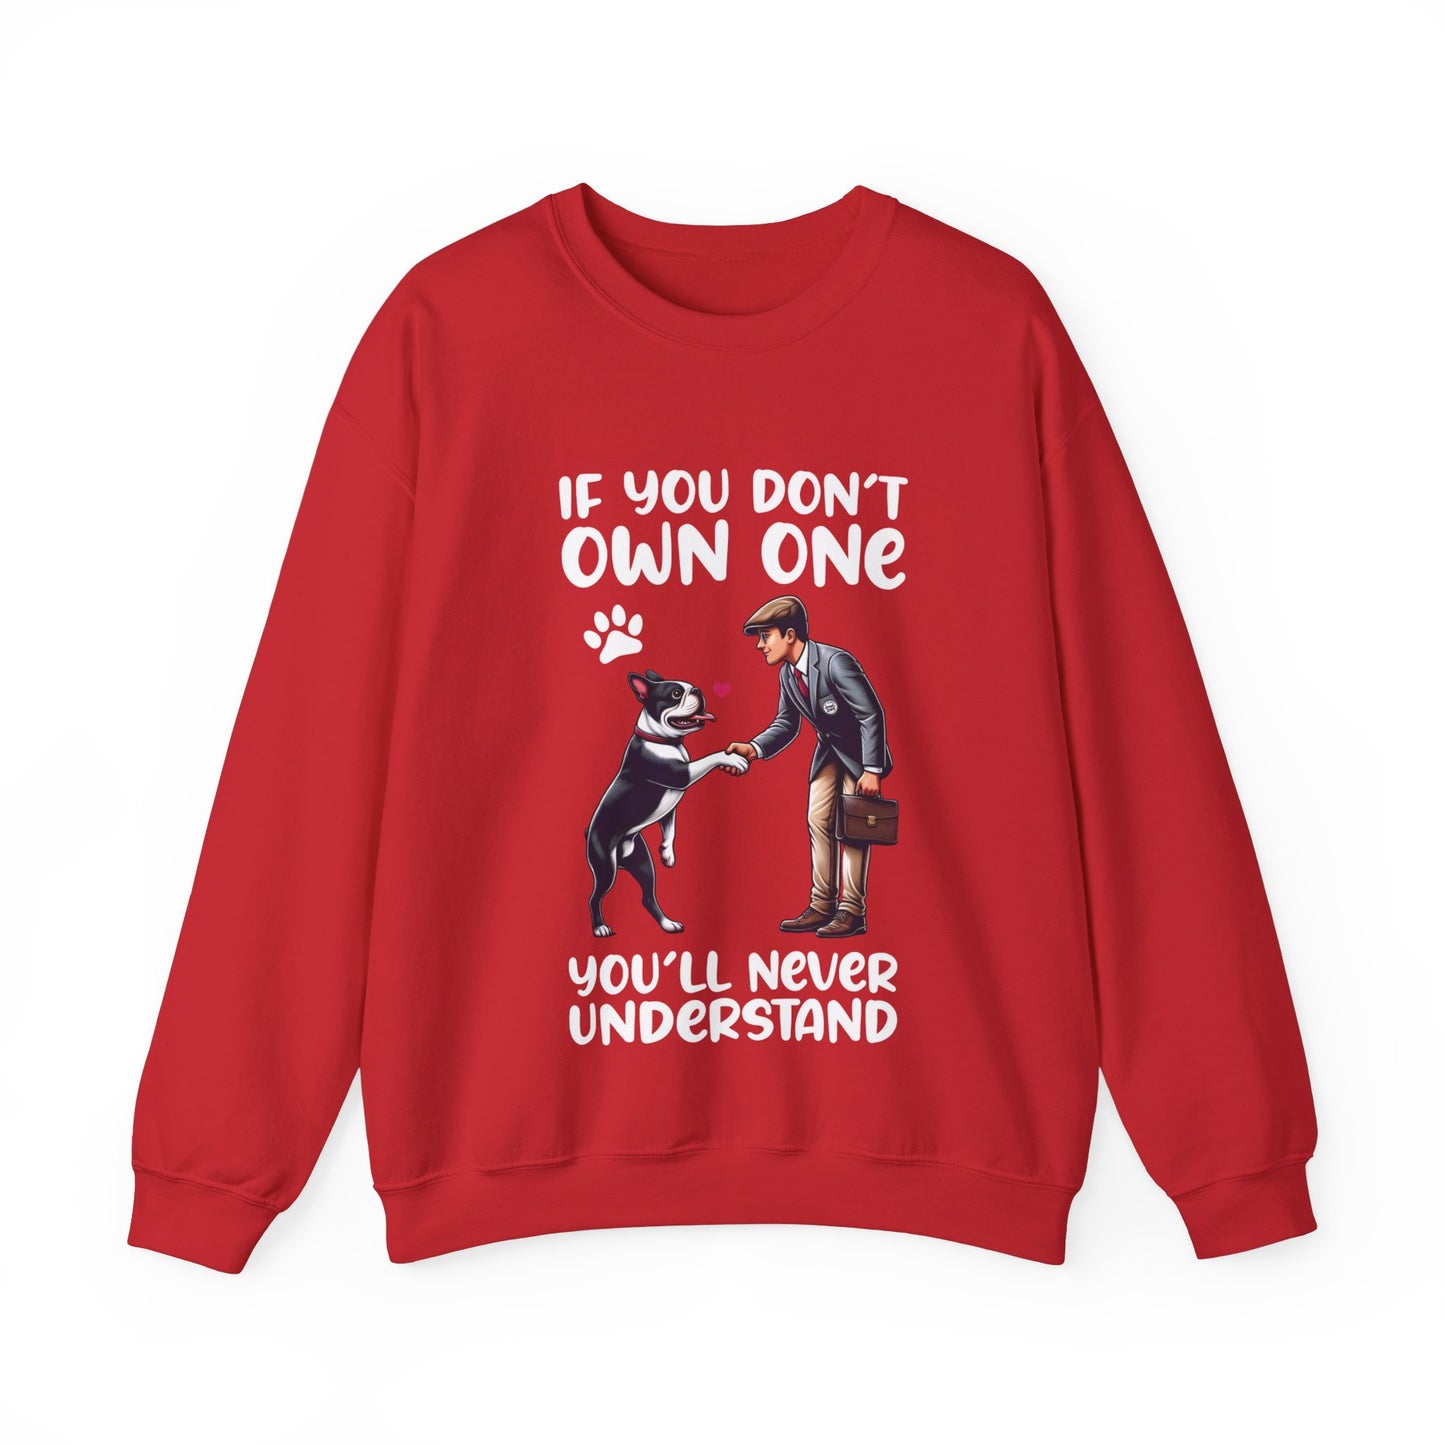 Titan  - Unisex Sweatshirt for Boston Terrier lovers